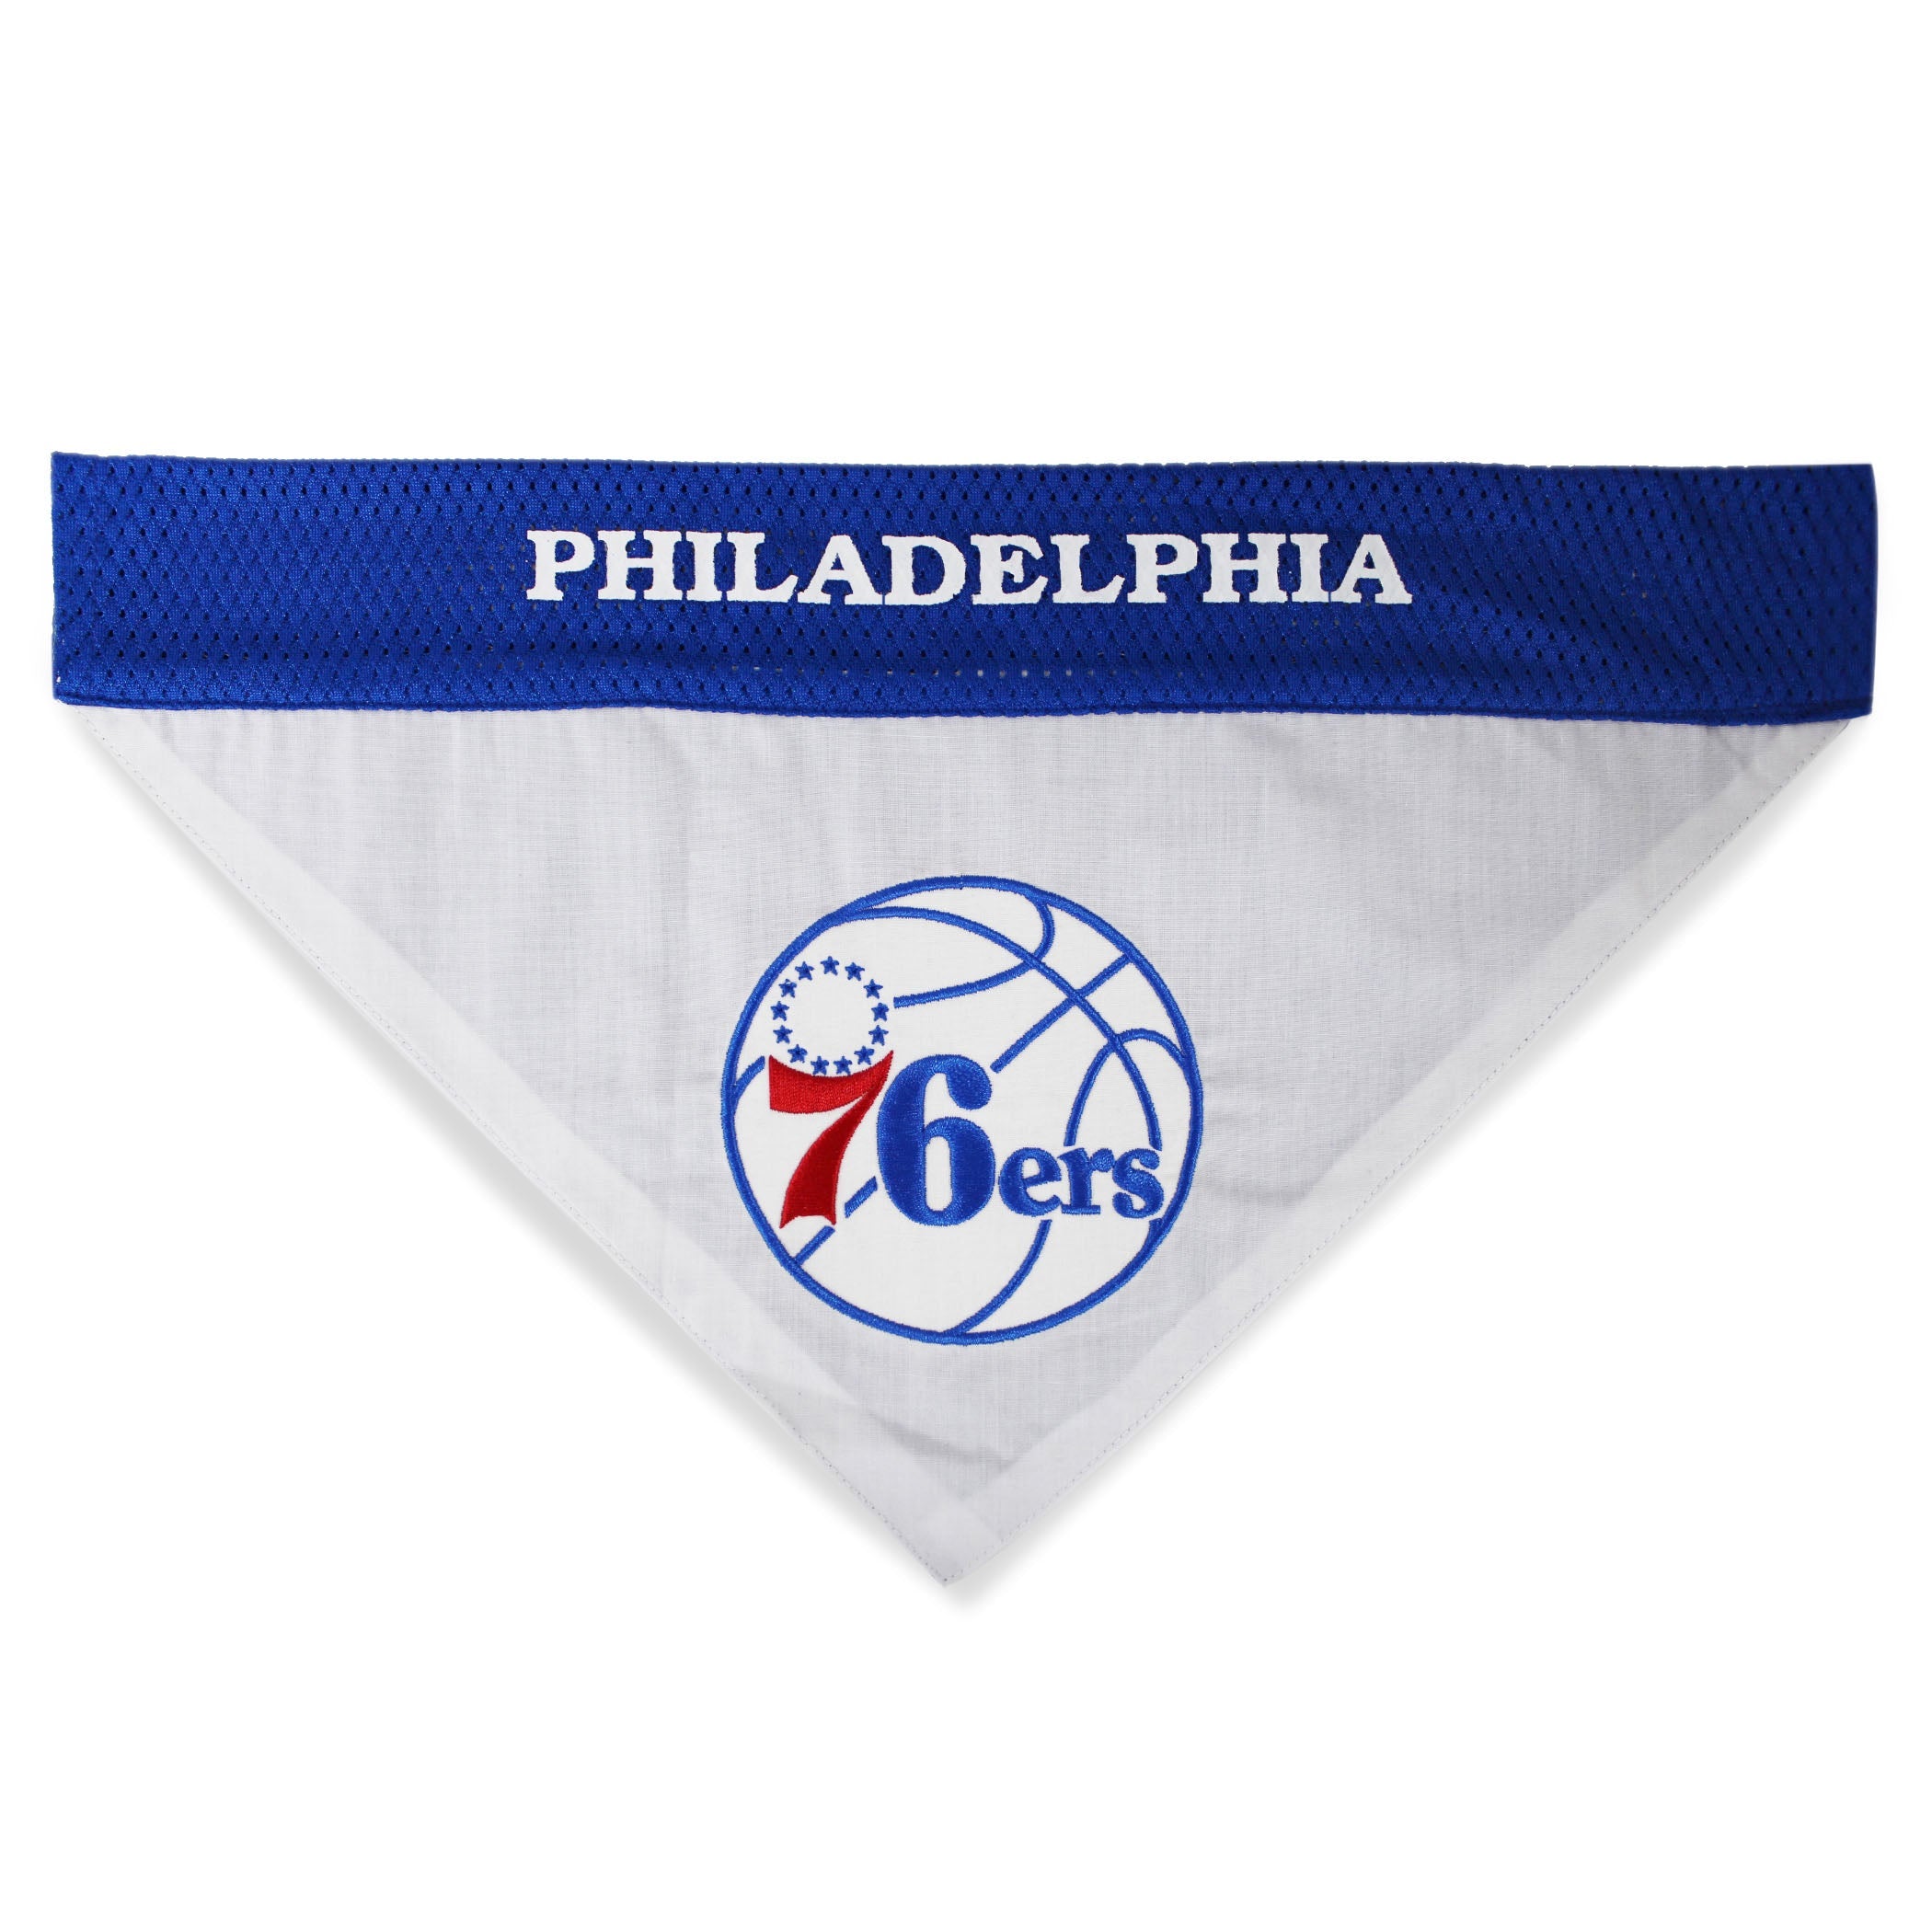 Philadelphia 76ers Reversible Home & Away Pet Bandana